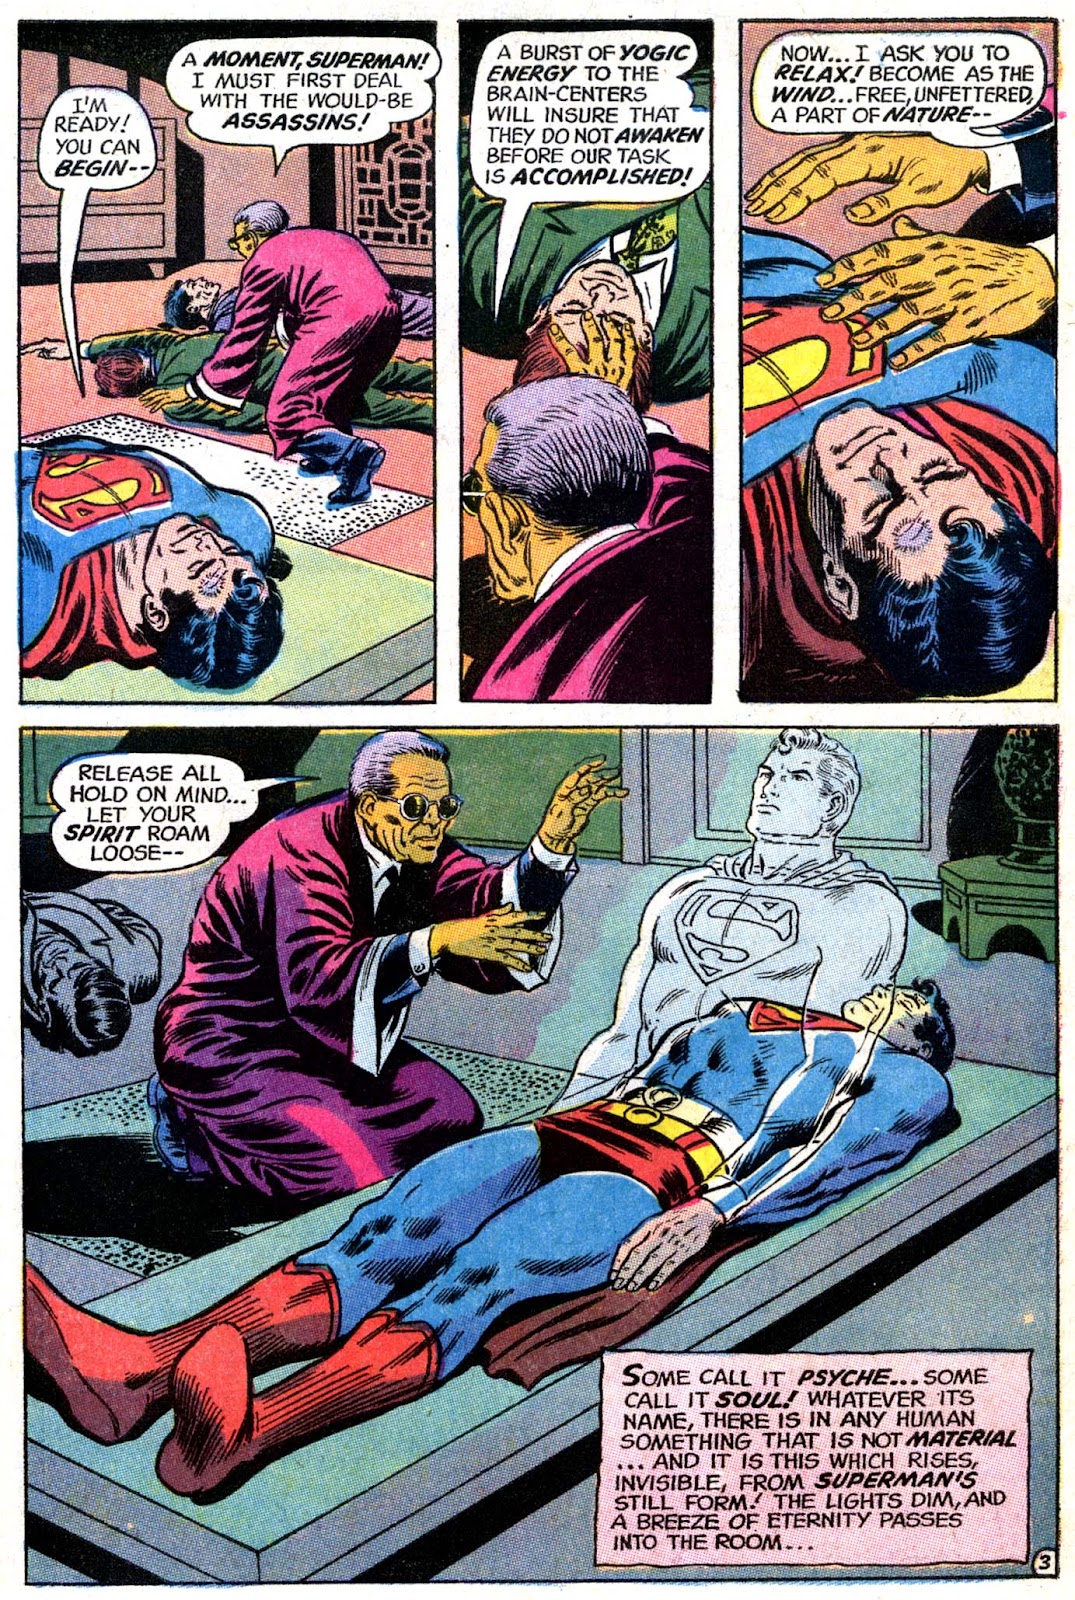 Comic Superman 1939 Issue 255 - 